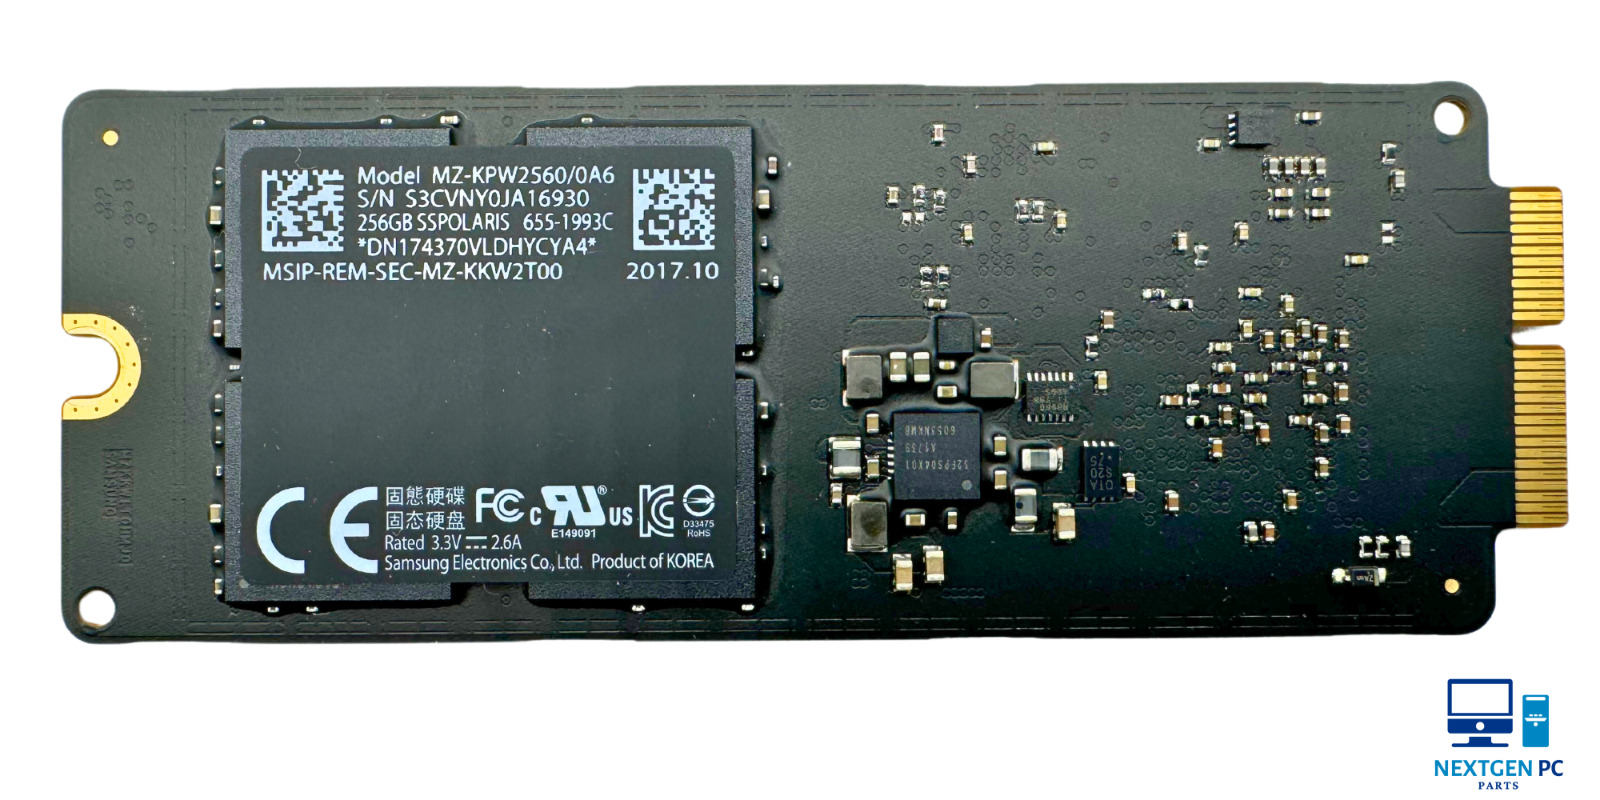 Genuine Apple Samsung MZ-KPW2560/0A6 256GB SSD 655-1993C POLARIS - TESTED